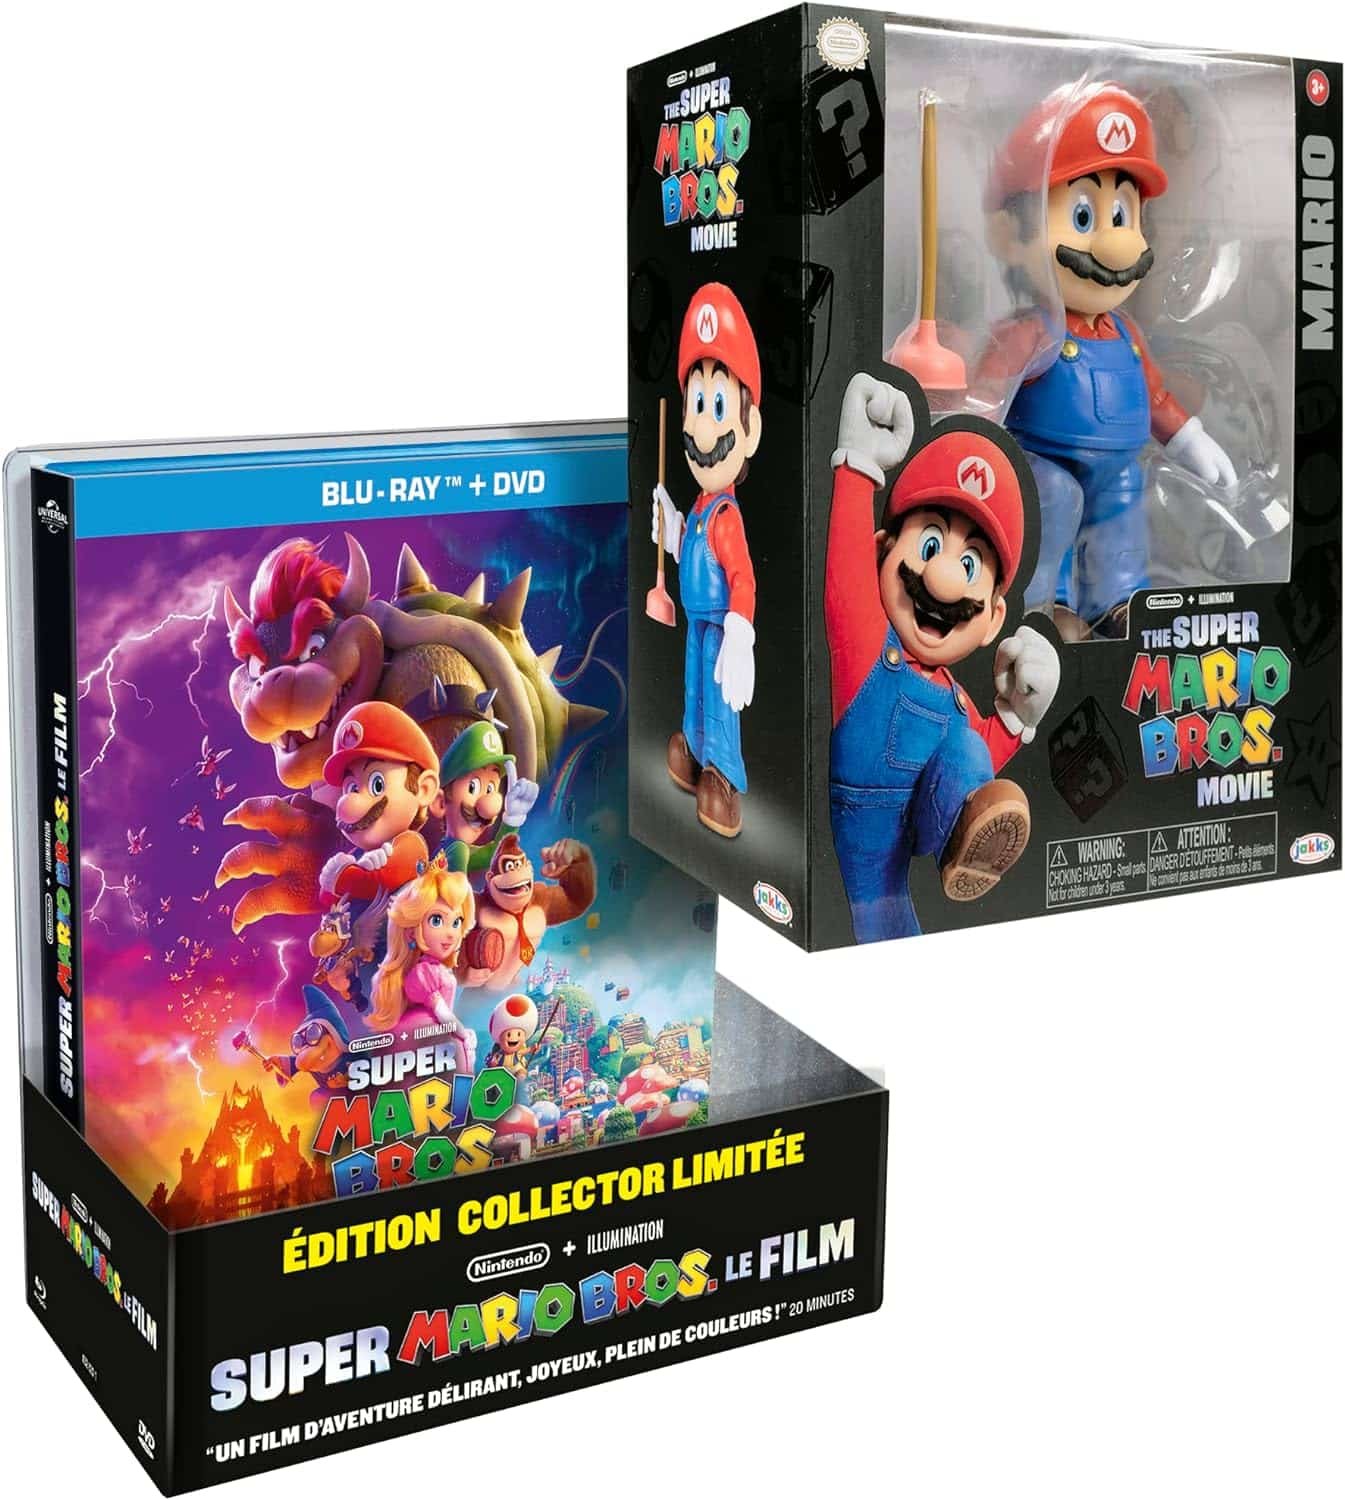 Le Coffret Collector Blu-Ray du film Super Mario Bros. est actuellement disponible à un prix très attractif